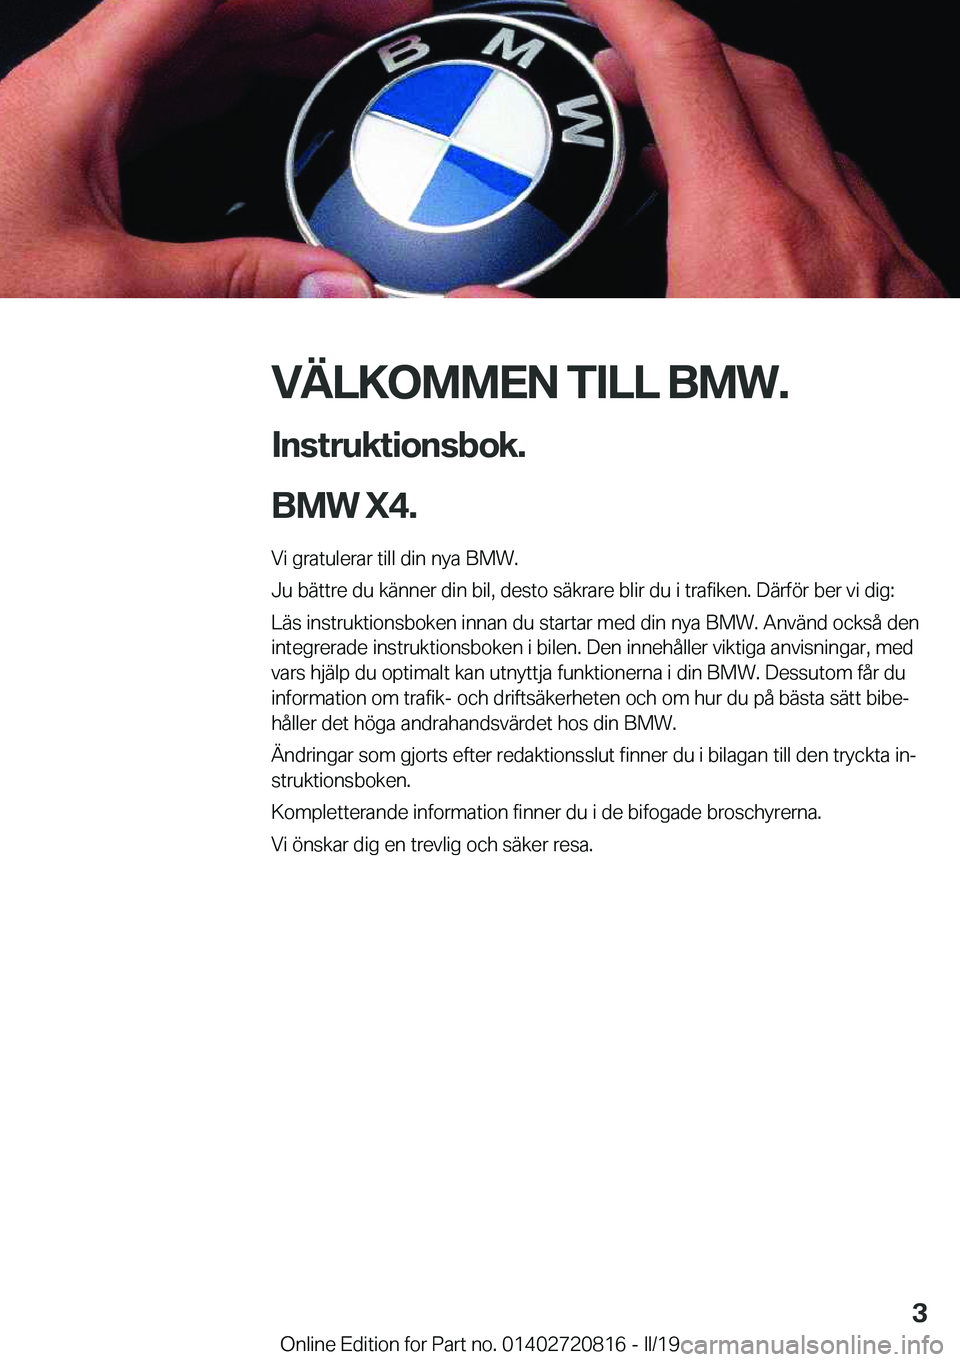 BMW X4 2019  InstruktionsbÖcker (in Swedish) �V�Ä�L�K�O�M�M�E�N��T�I�L�L��B�M�W�.�I�n�s�t�r�u�k�t�i�o�n�s�b�o�k�.
�B�M�W��X�4�.
�V�i��g�r�a�t�u�l�e�r�a�r��t�i�l�l��d�i�n��n�y�a��B�M�W�.
�J�u��b�ä�t�t�r�e��d�u��k�ä�n�n�e�r��d�i�n�